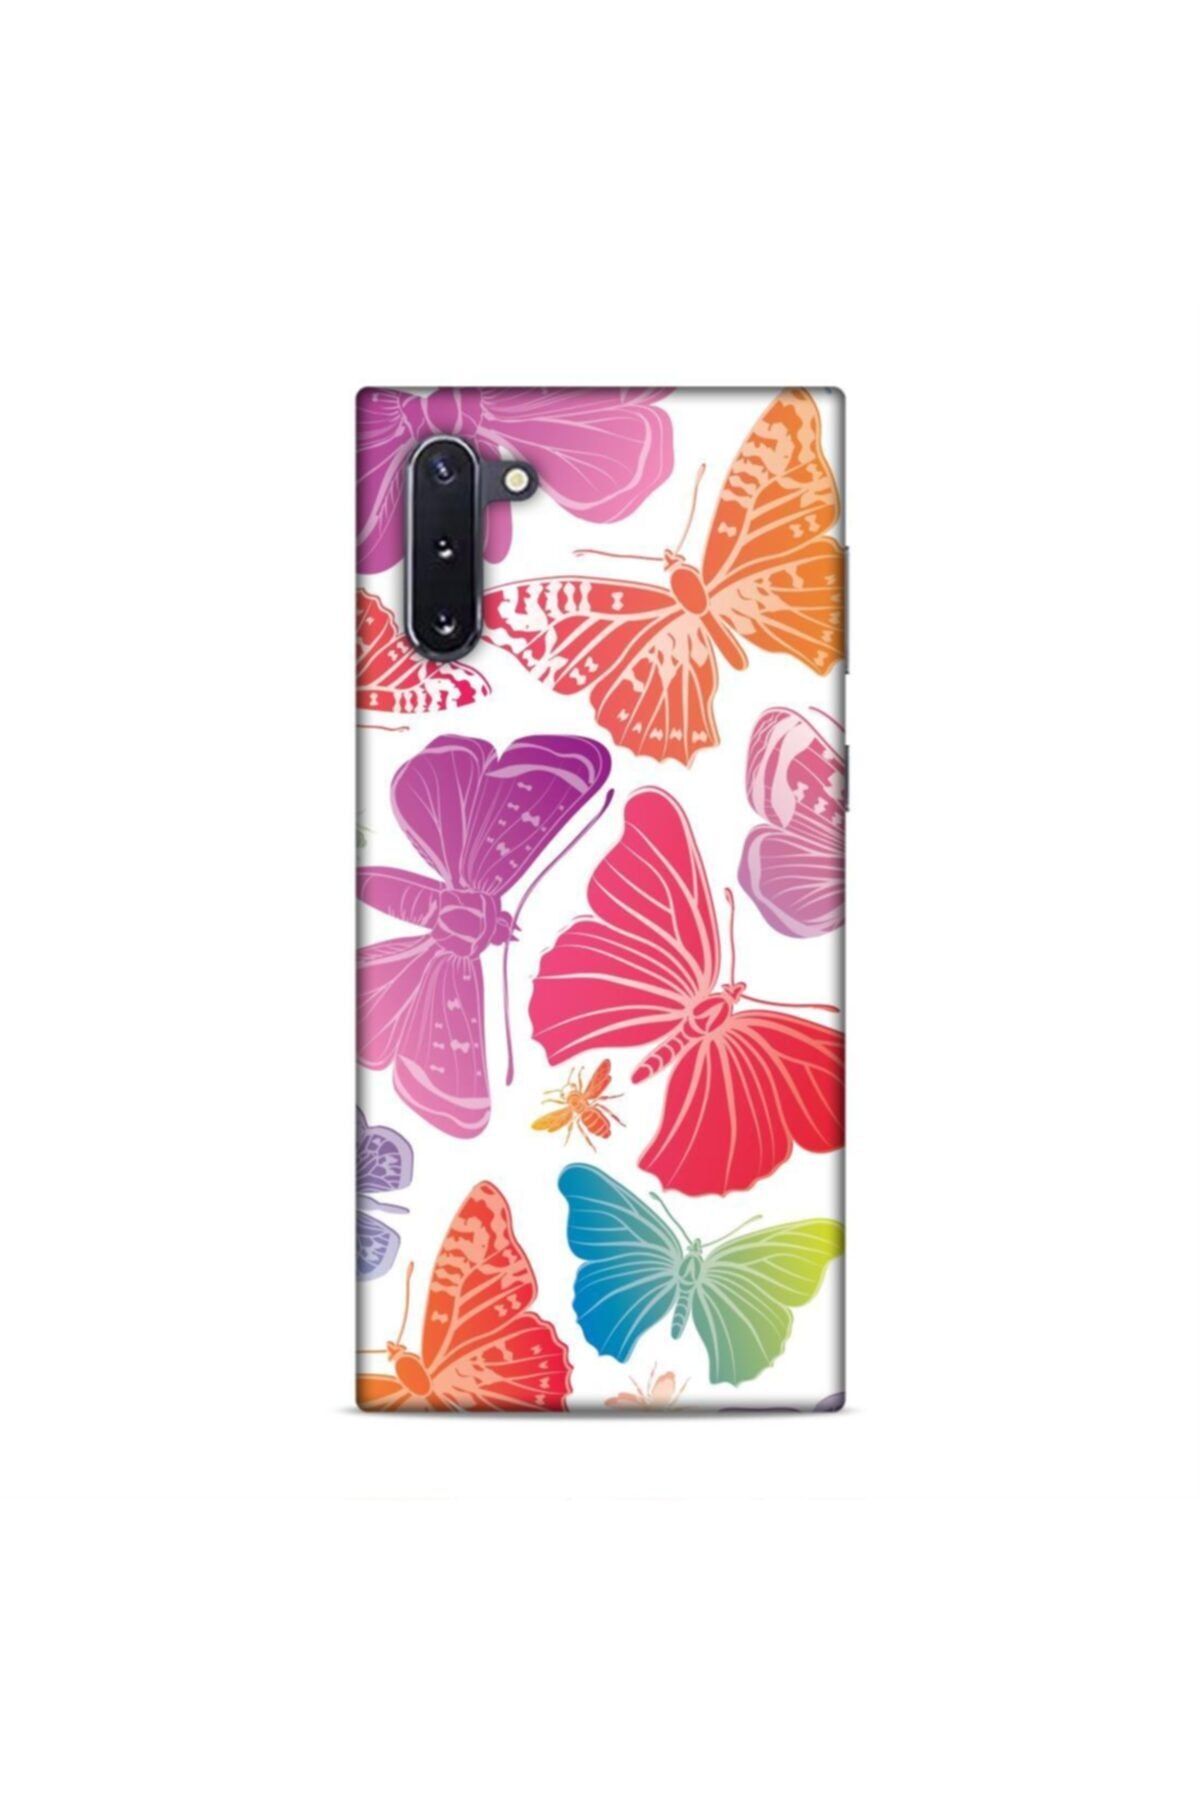 Pickcase Samsung Galaxy Note 1    Kelebekler    Desenli Arka Kapak